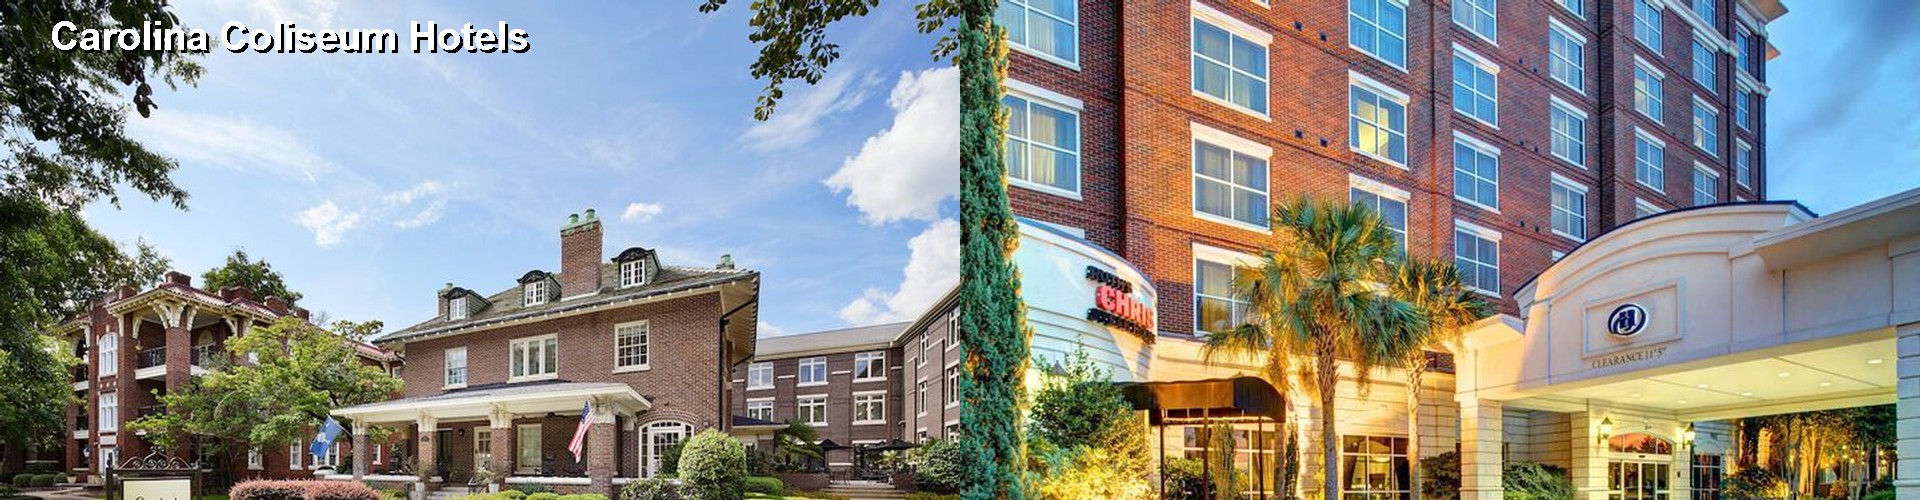 5 Best Hotels near Carolina Coliseum